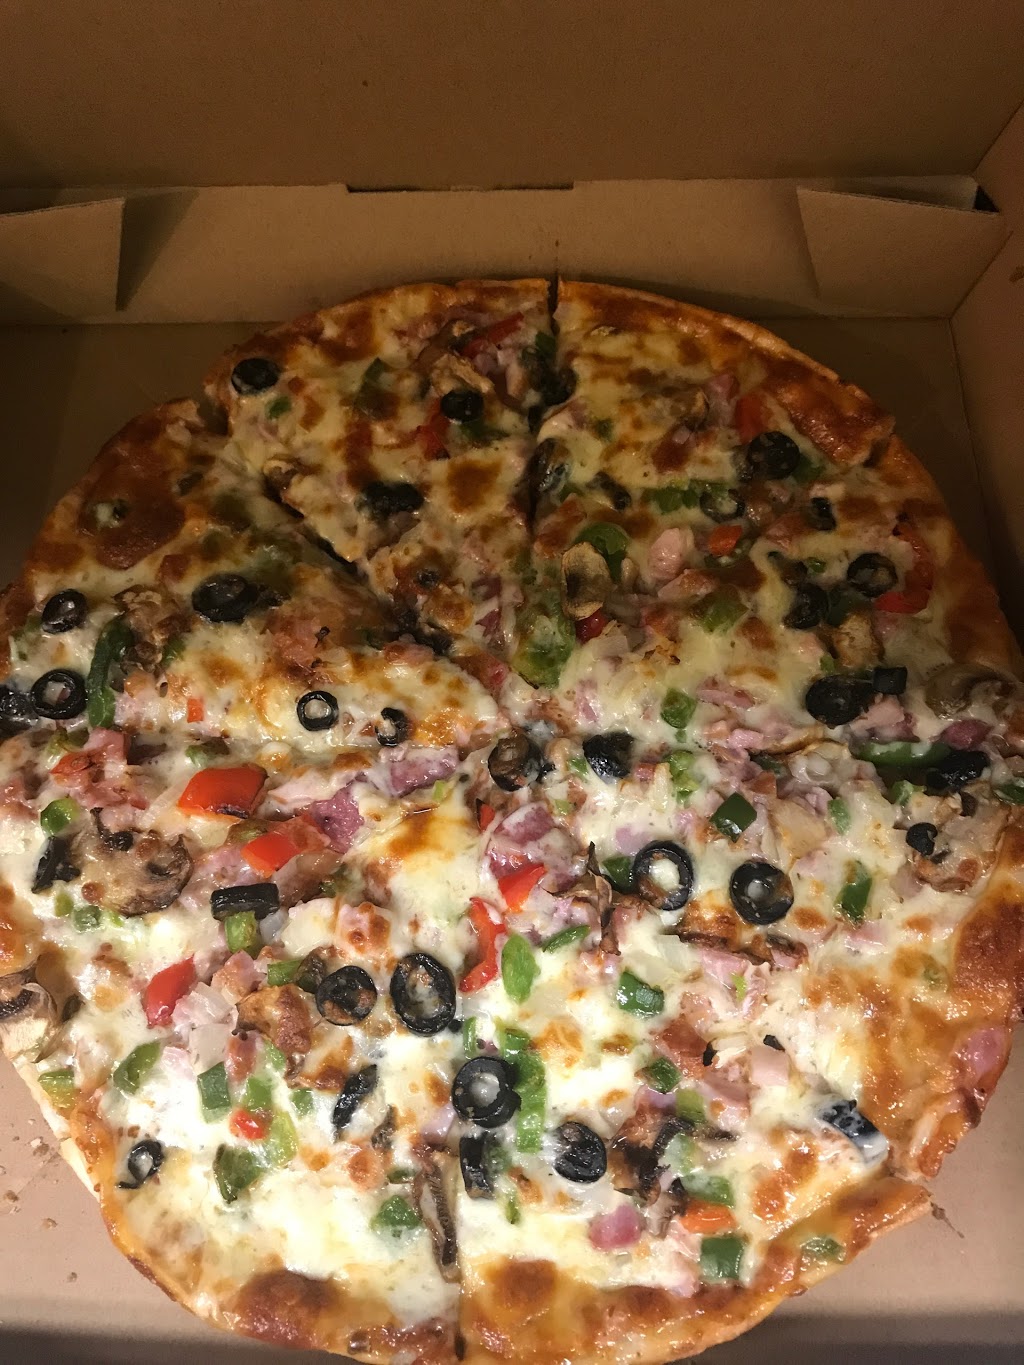 Spaceman Pizza | shop 2/46-56 Osborne Rd, North Haven SA 5018, Australia | Phone: (08) 8246 0205